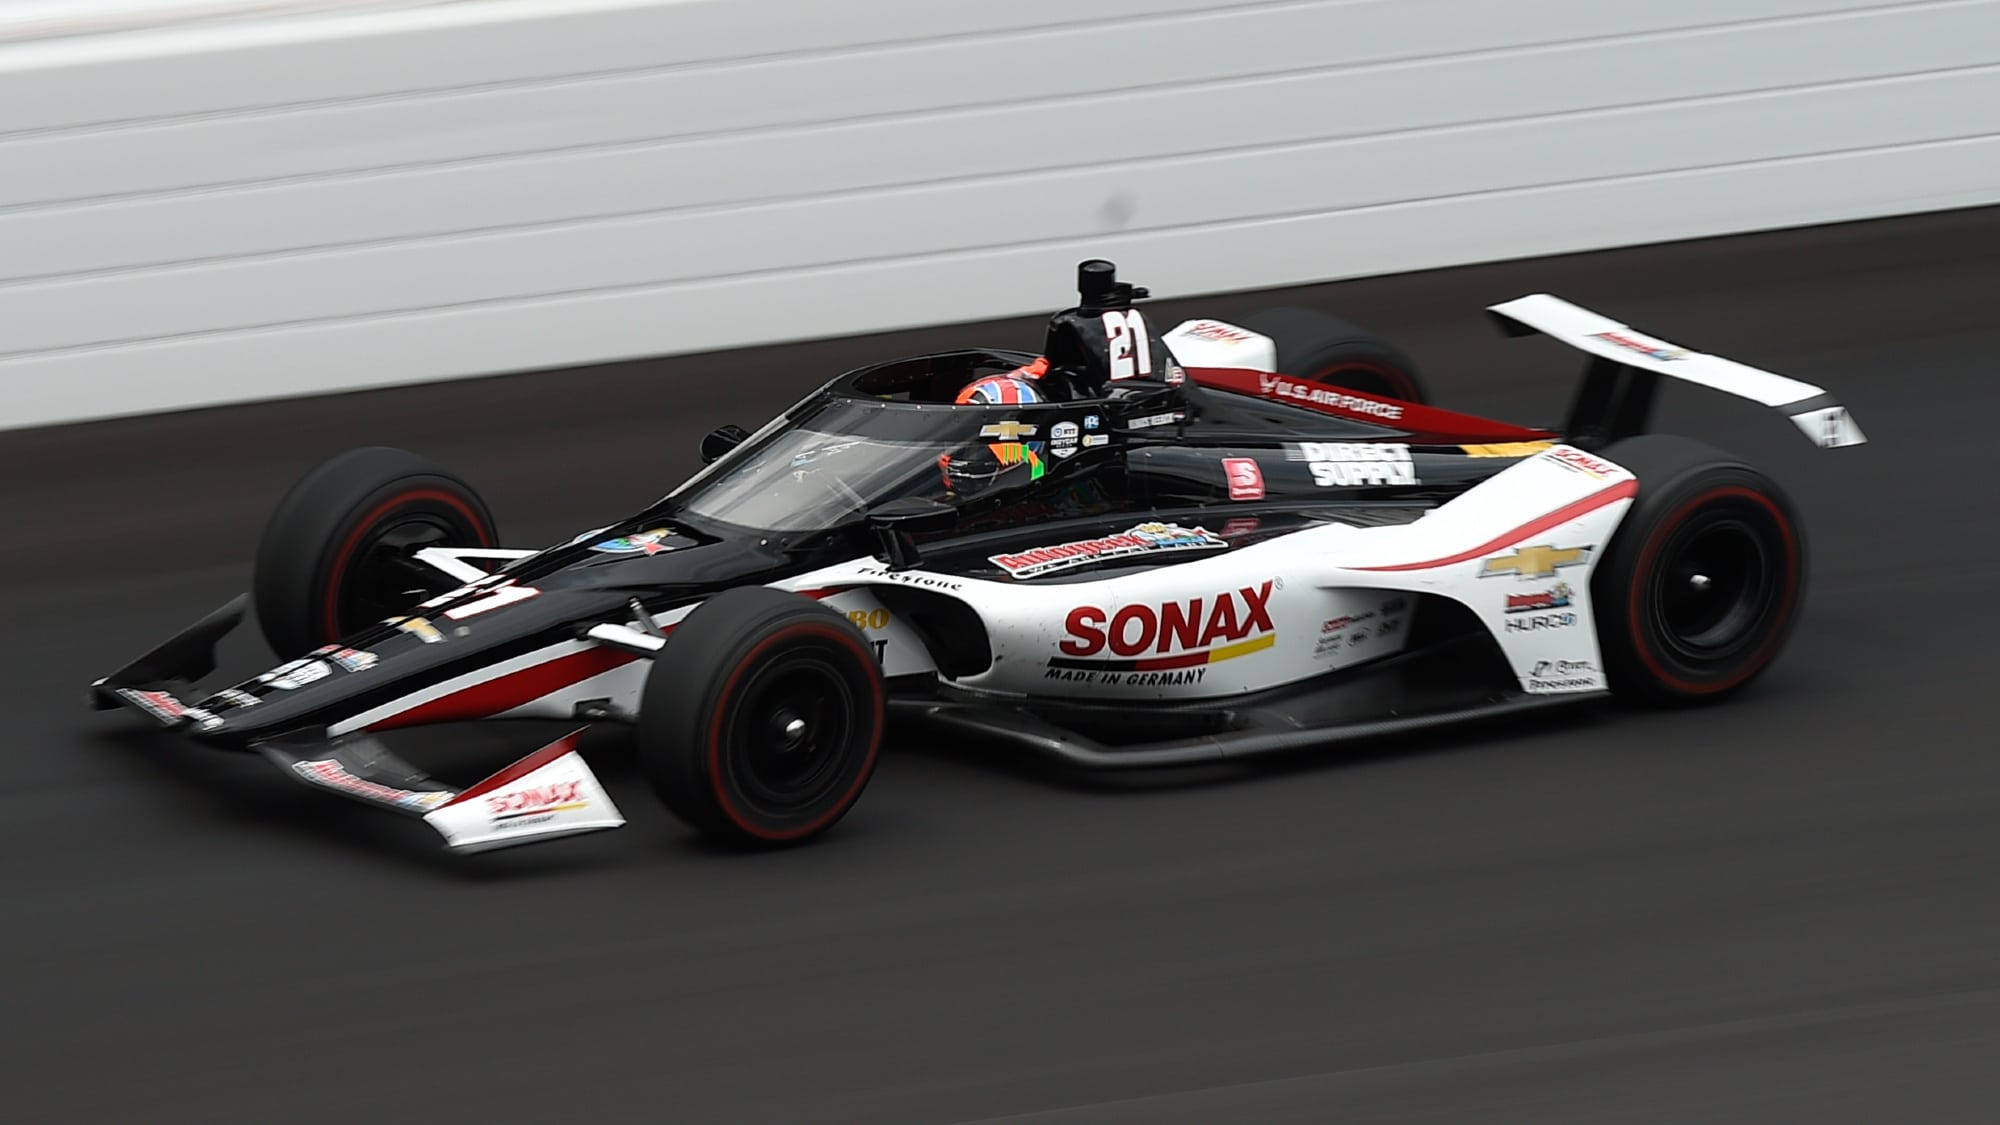 Rinus VeeKay, 2020 Indy 500